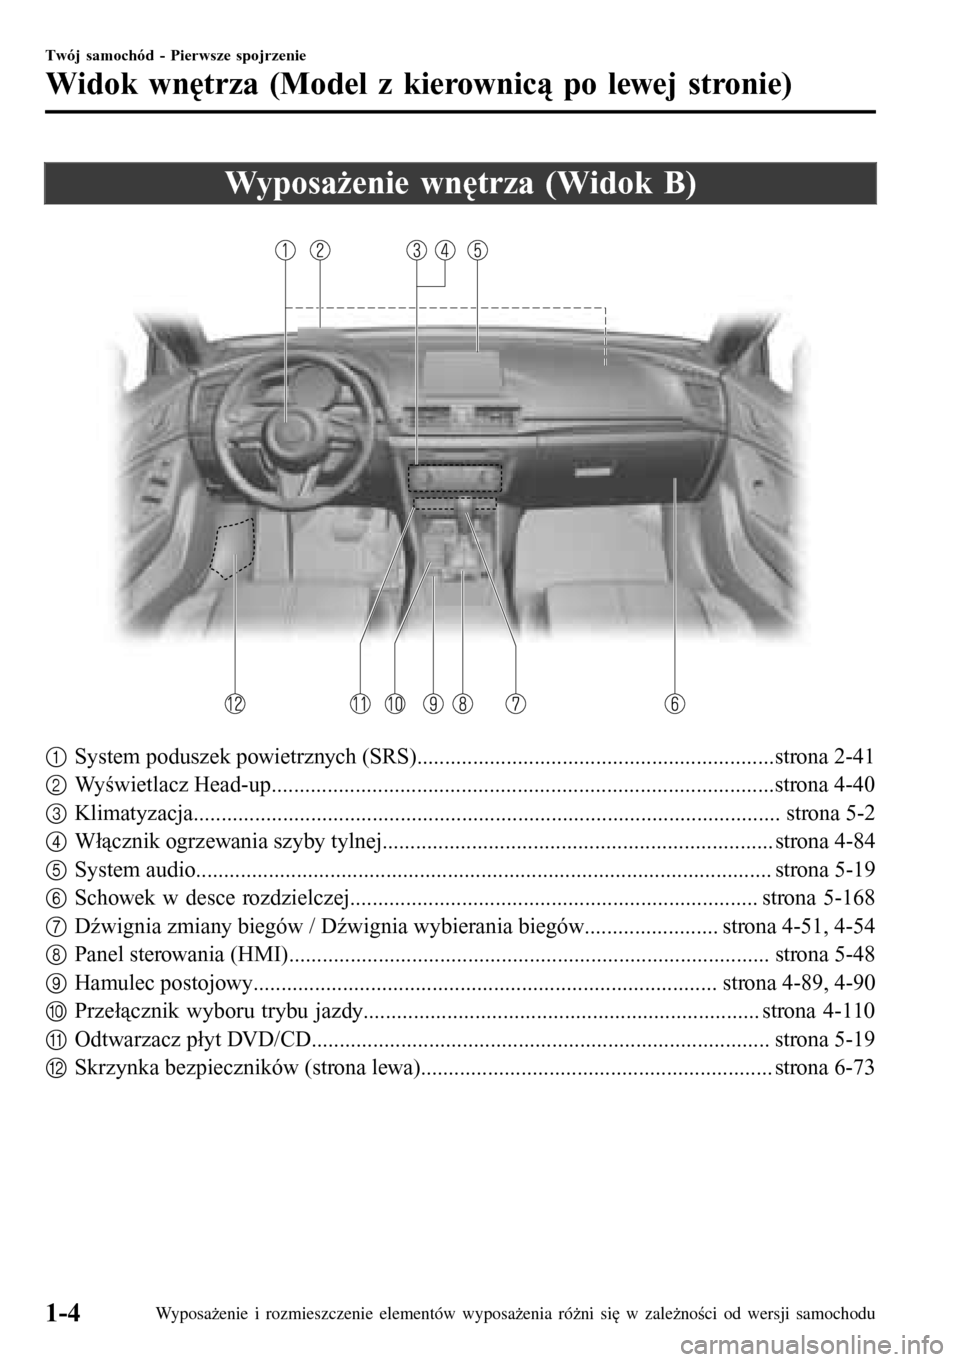 Mazda Model 3 Hatchback 2016 Instrukcja Obsługi (In Polish) (787 Pages)